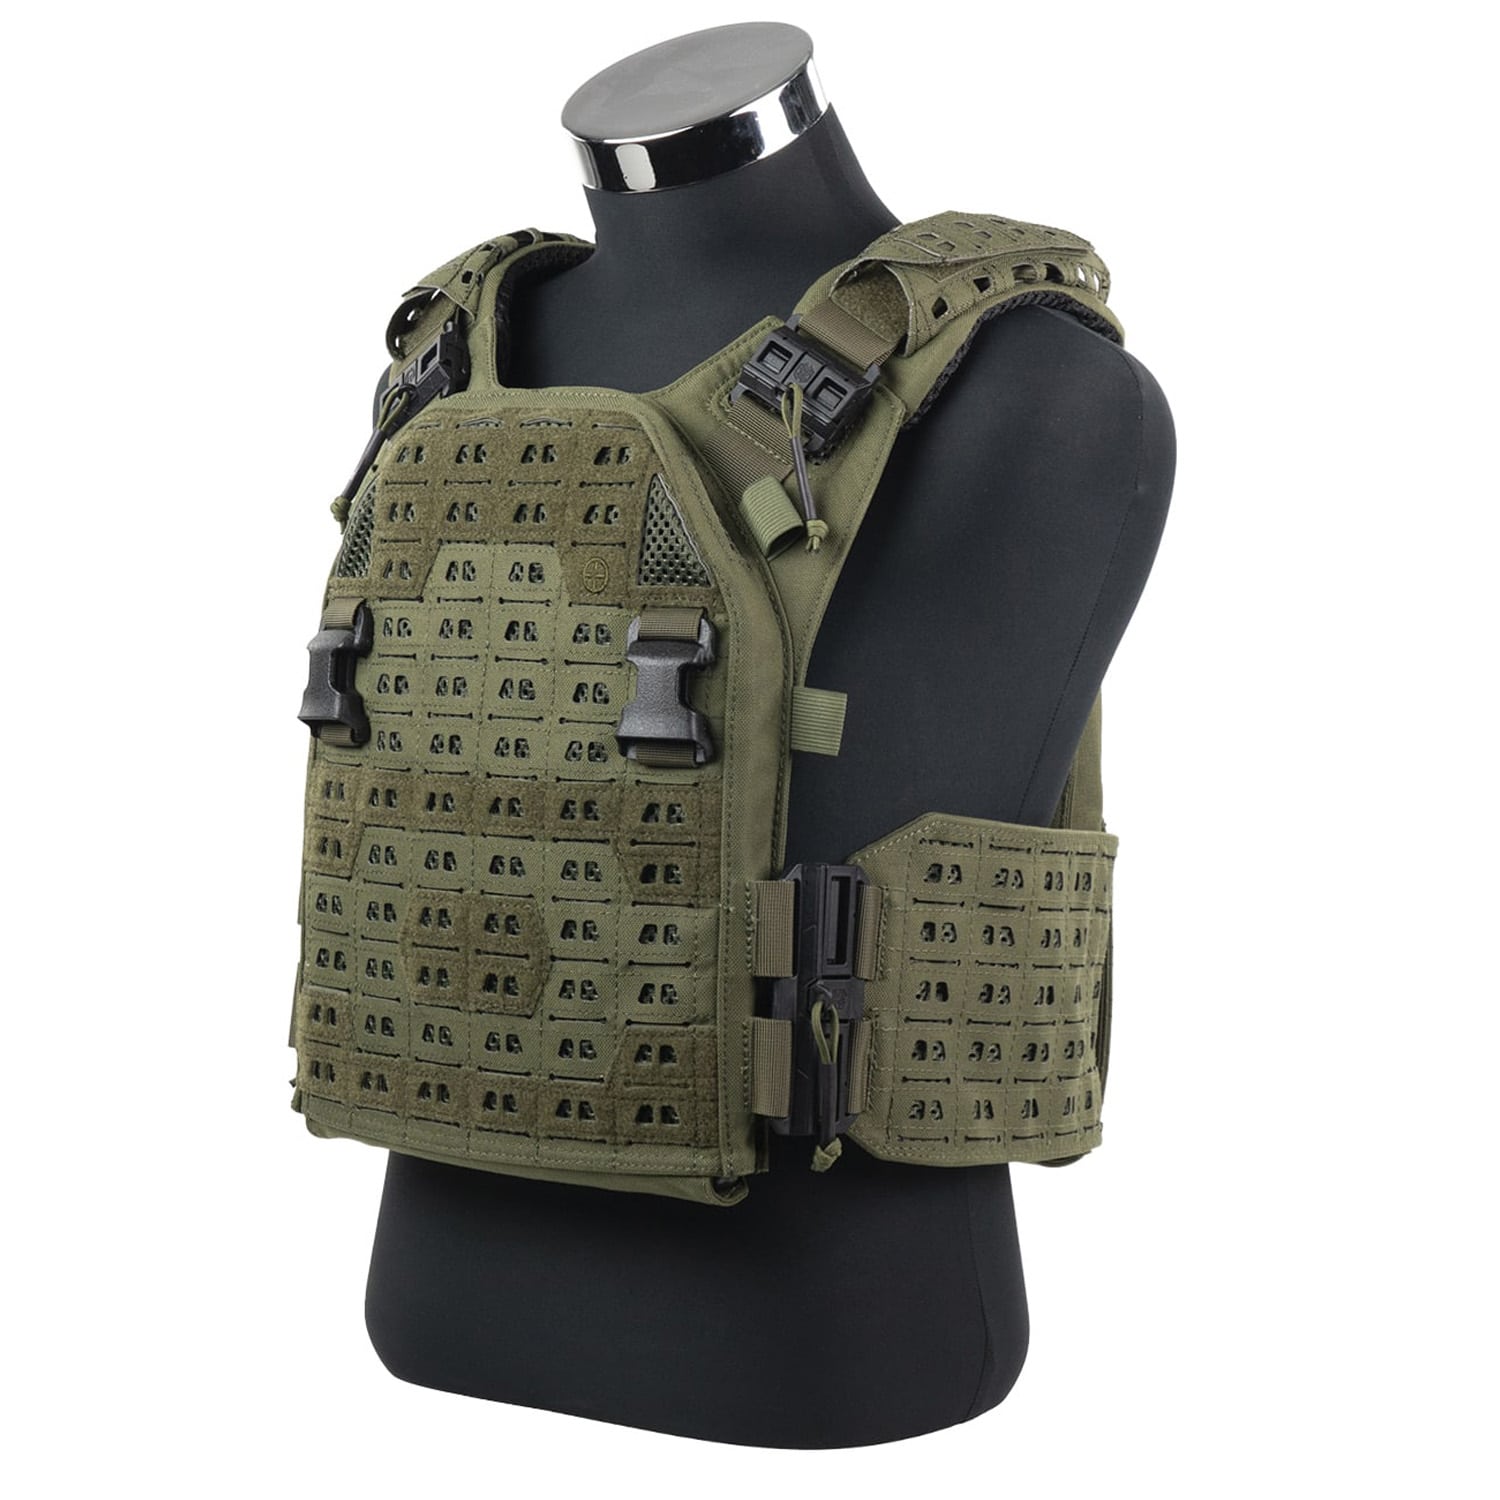 Backpack Shoulder Straps Cushion Buffer Pads Mat For Tactical Plate Carrier Vest 